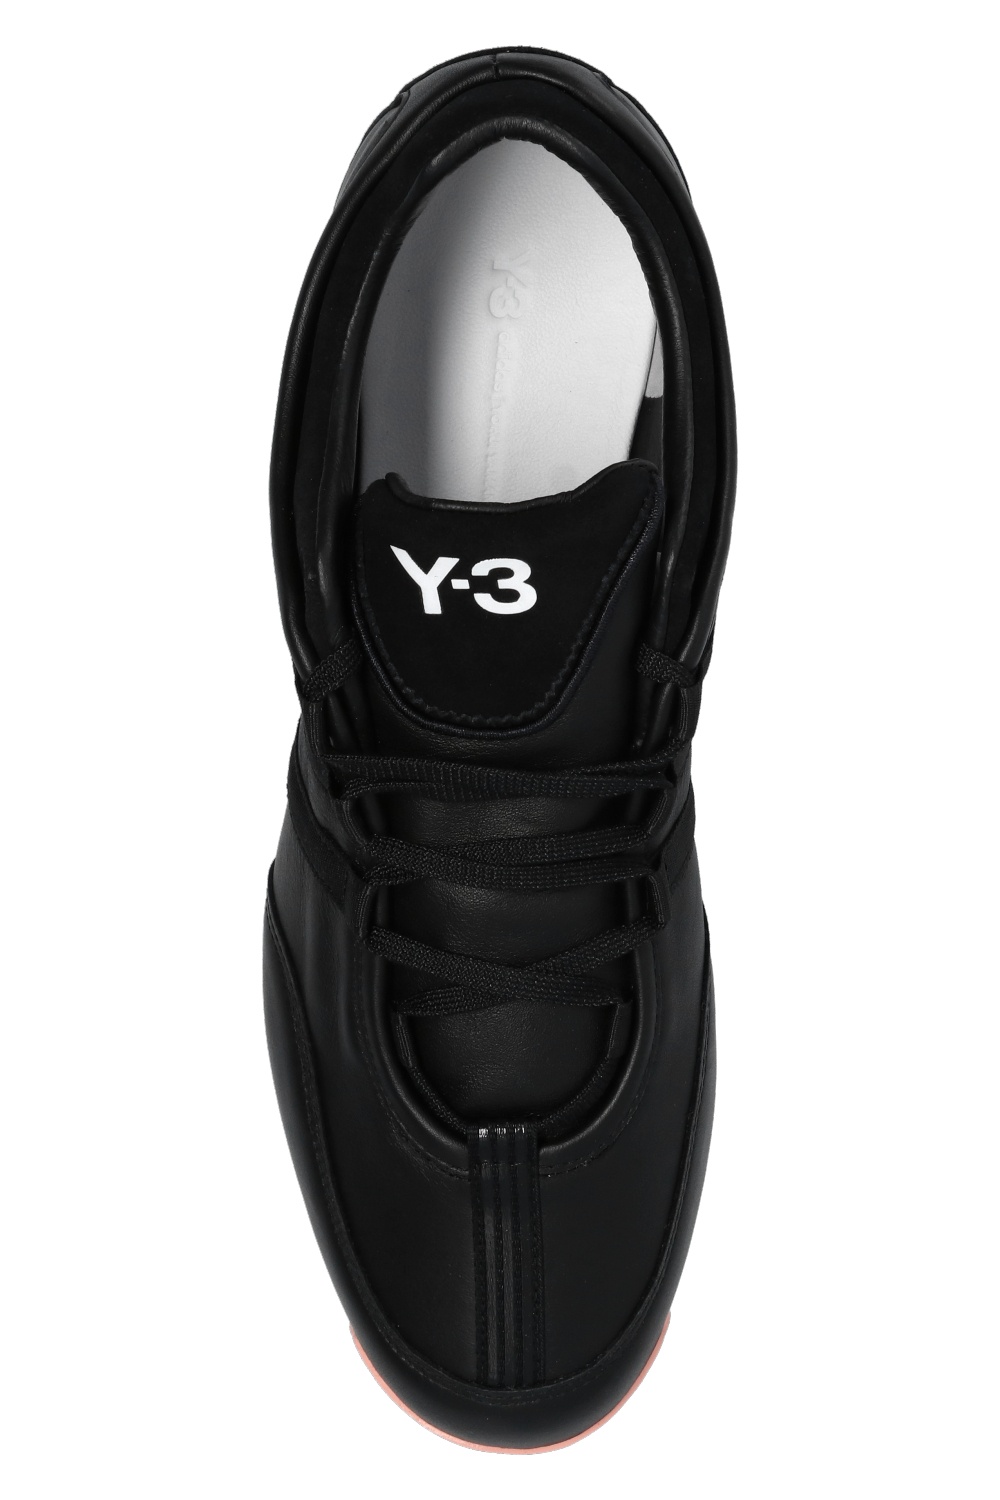 zapatillas de running gore-tex talla 46.5 rosas ‘Boxing’ sneakers